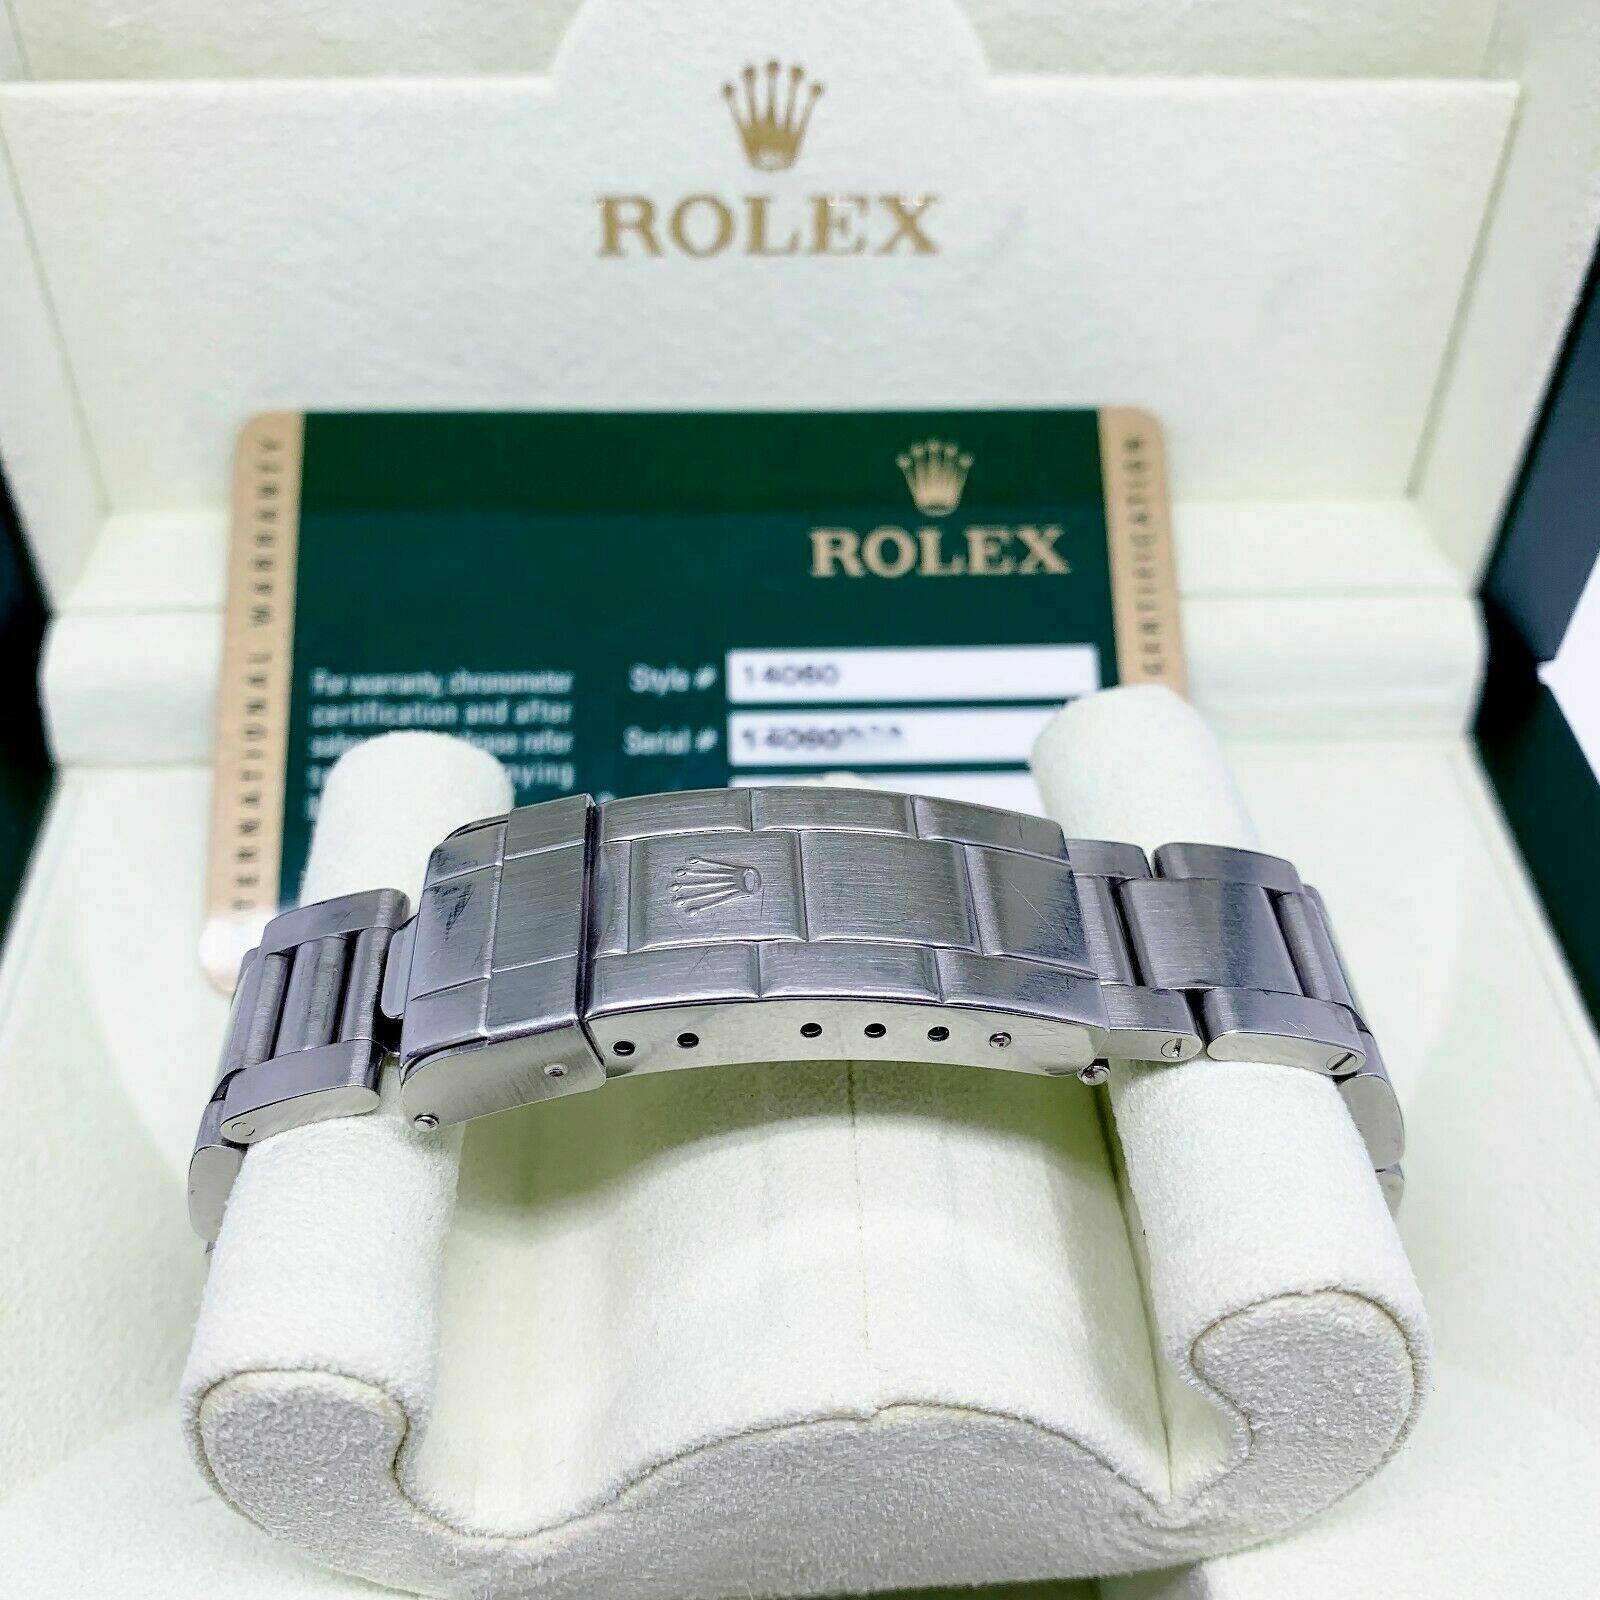 Rolex Black Submariner No Date Stainless Steel Watch Ref 14060 Engraved Box&Card